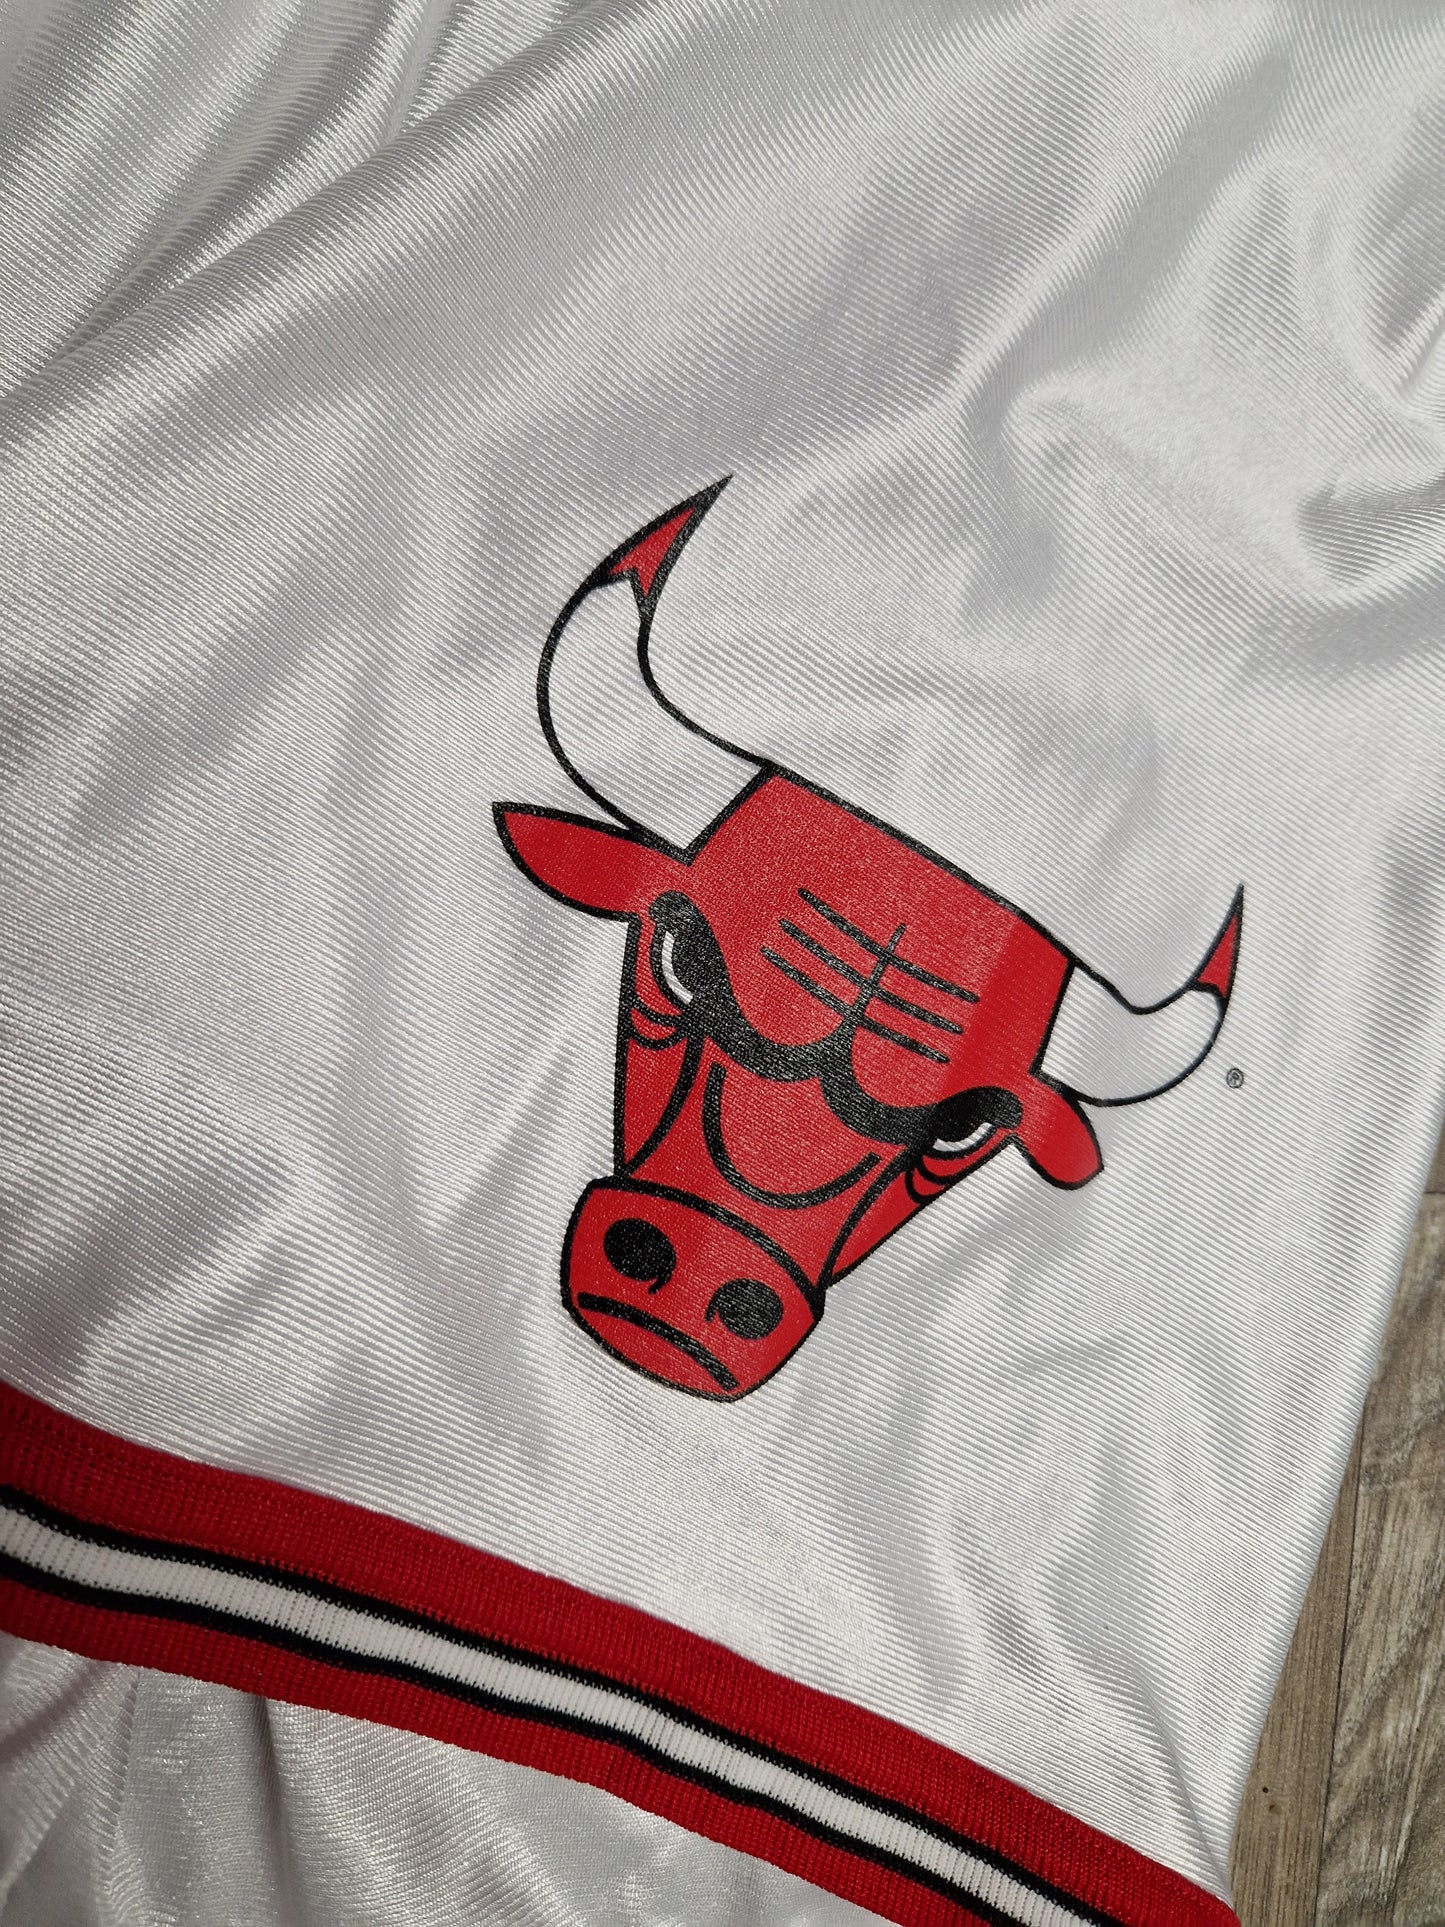 Chicago Bulls Shorts Size XL